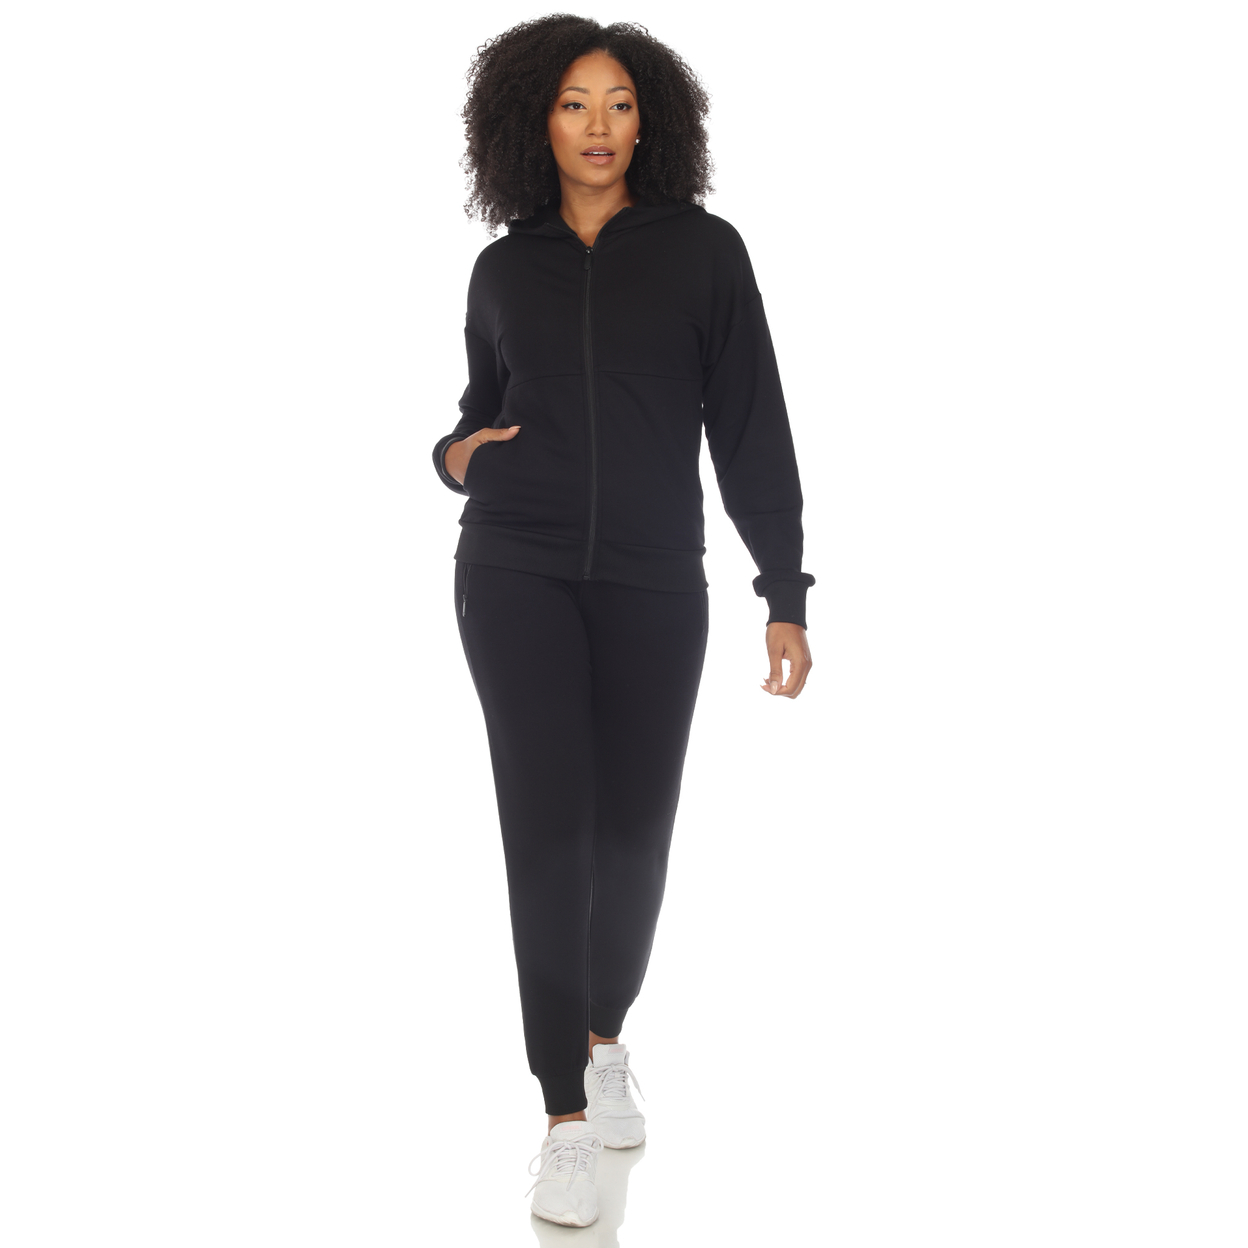 White Mark Women's 2-PC Fleece Sweatsuit Set - Black, Medium